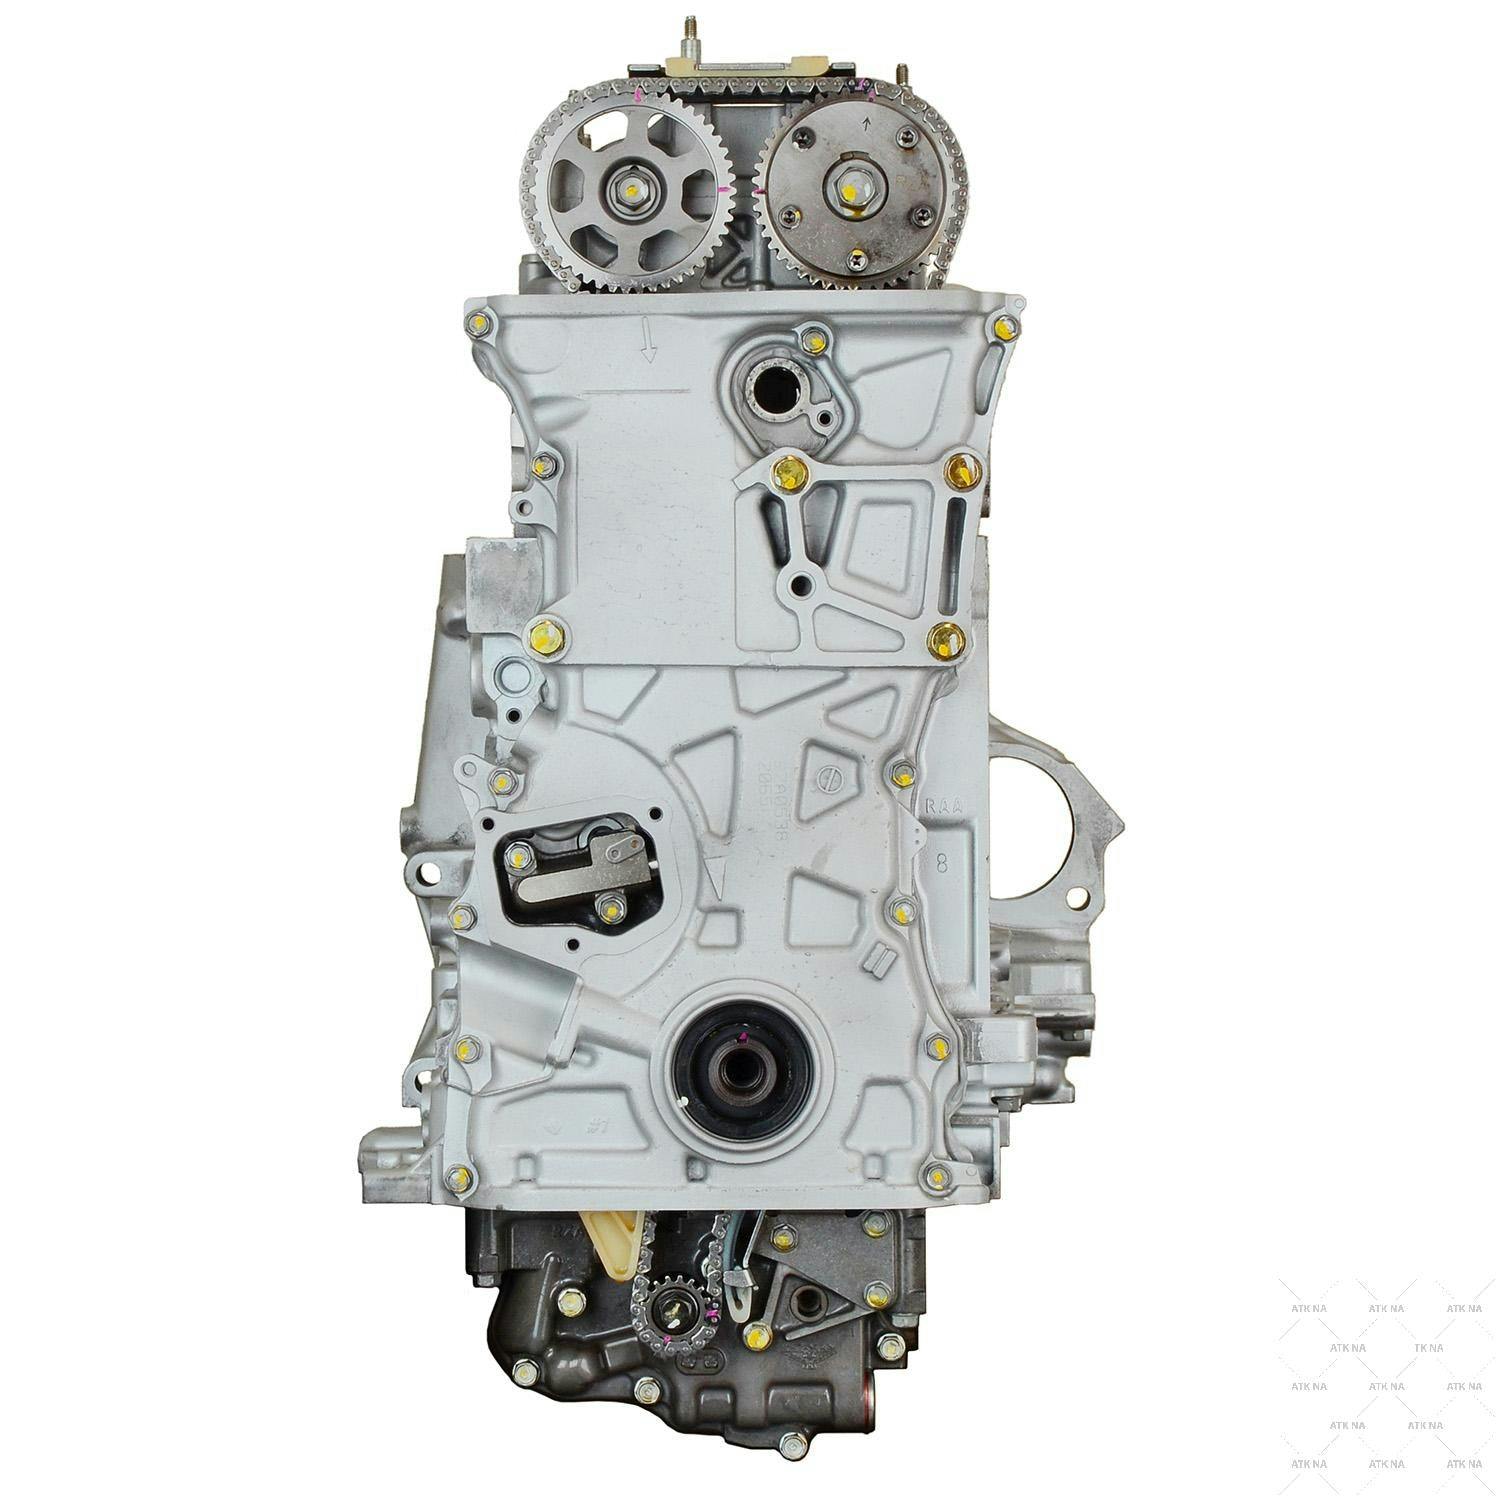 1.5L Inline-4 Engine for 2009-2014 Honda Fit